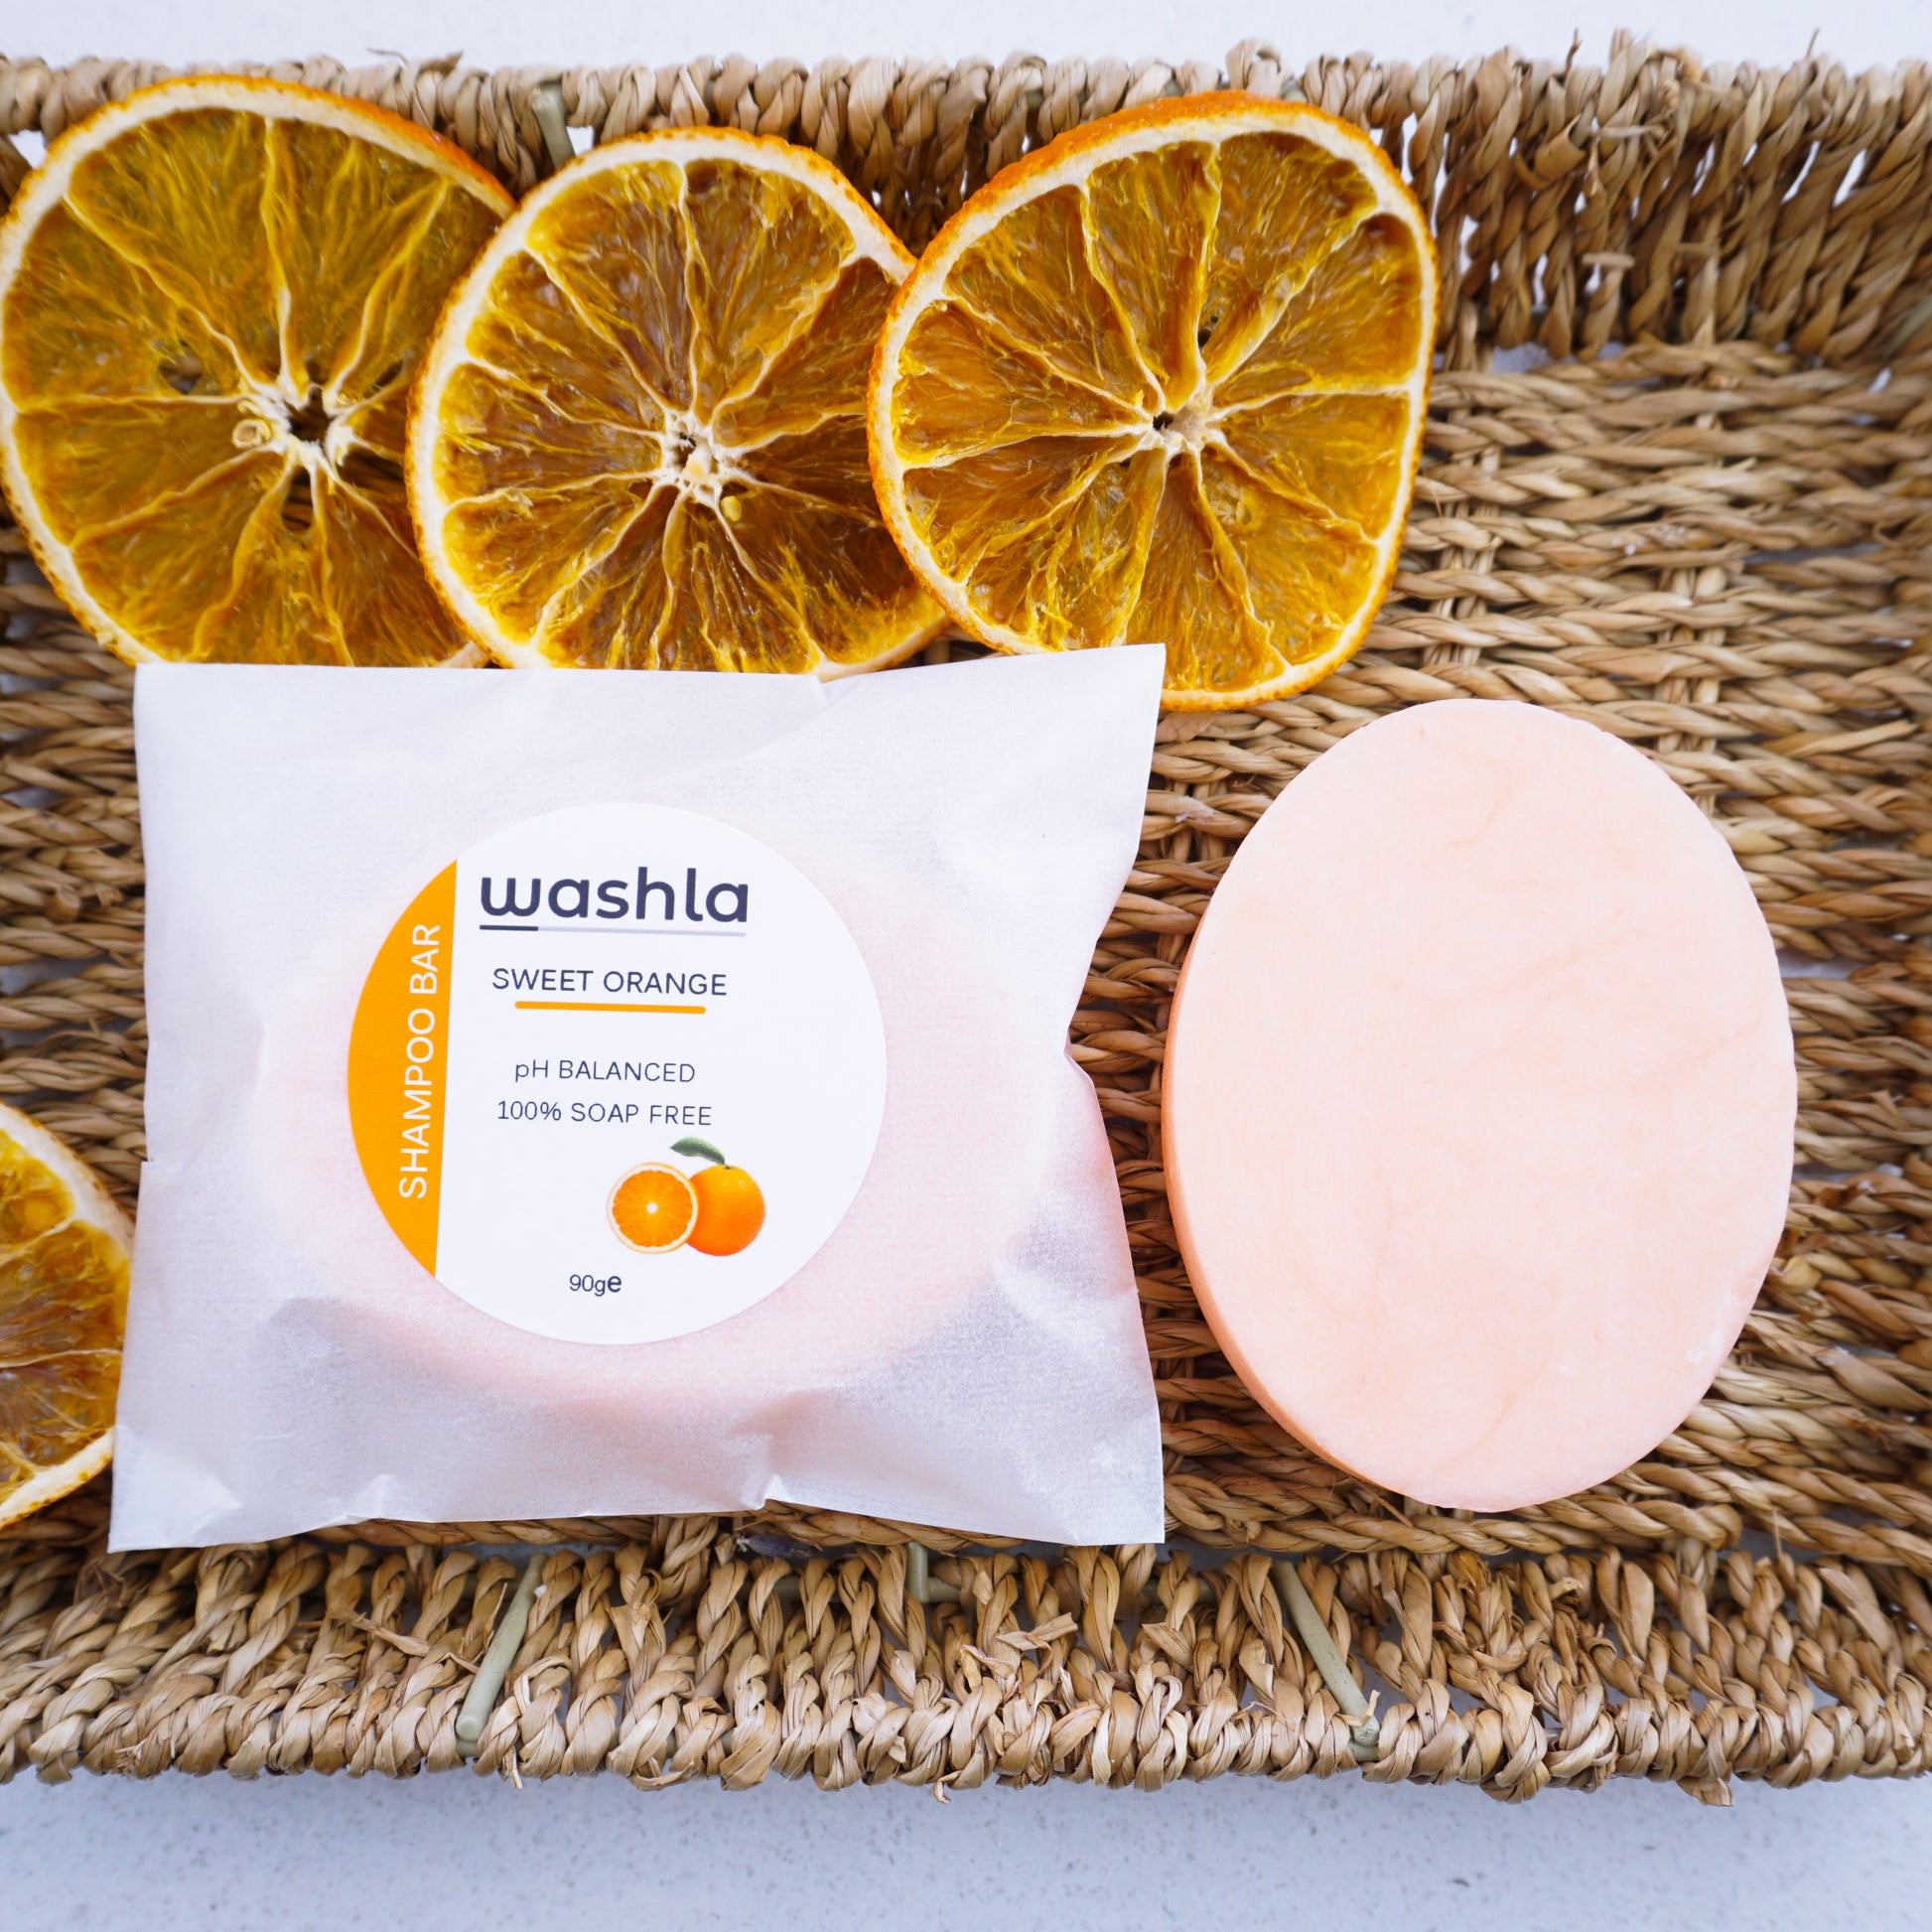 Washla Orange shampoo bar wrapped and an unwrapped bar